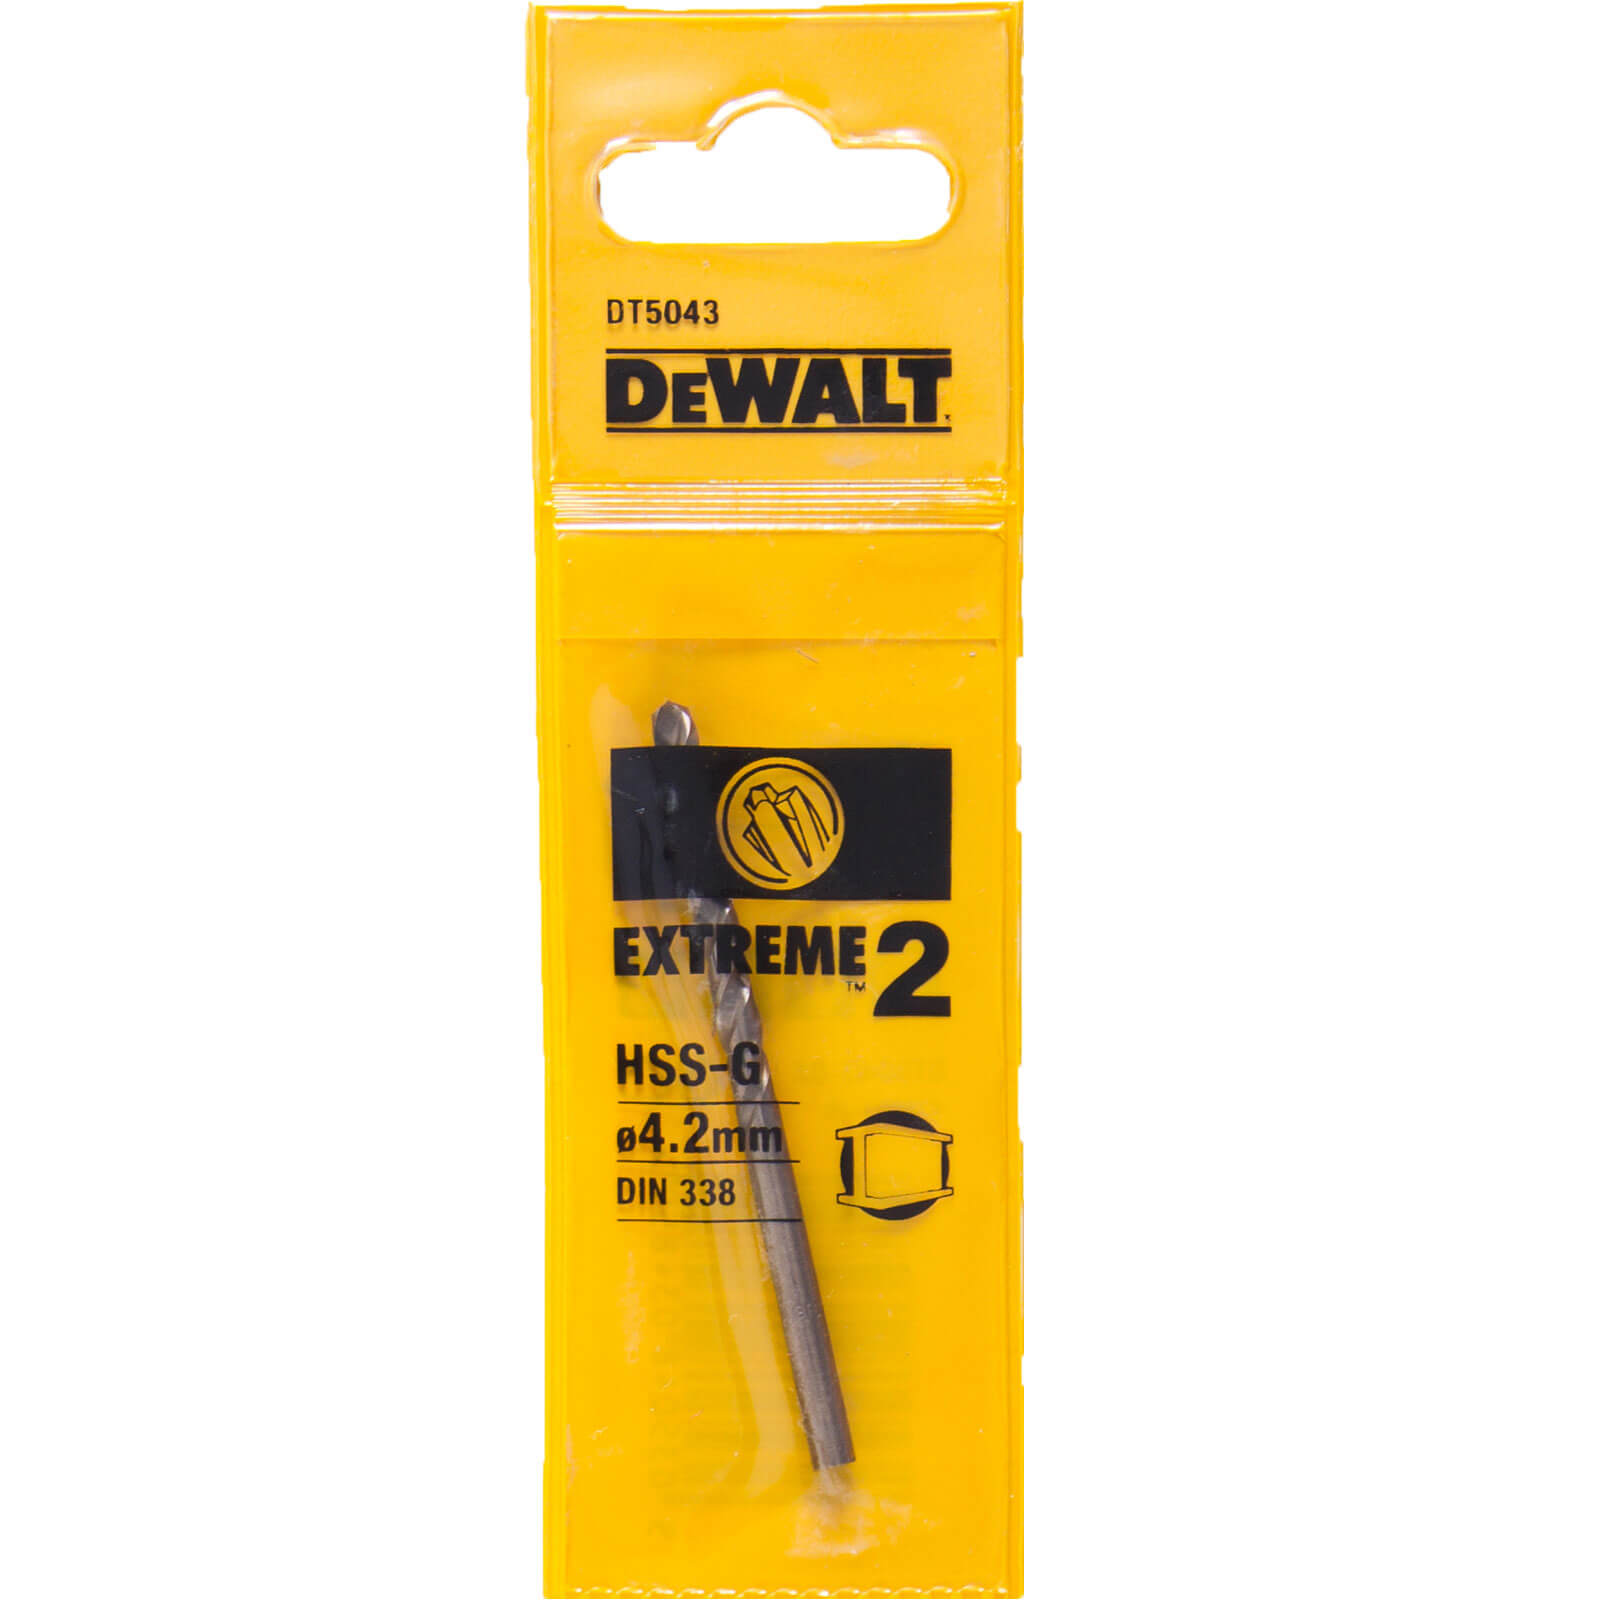 Image of DeWalt Extreme 2 Metal Drill Bit 4.2mm Pack of 1